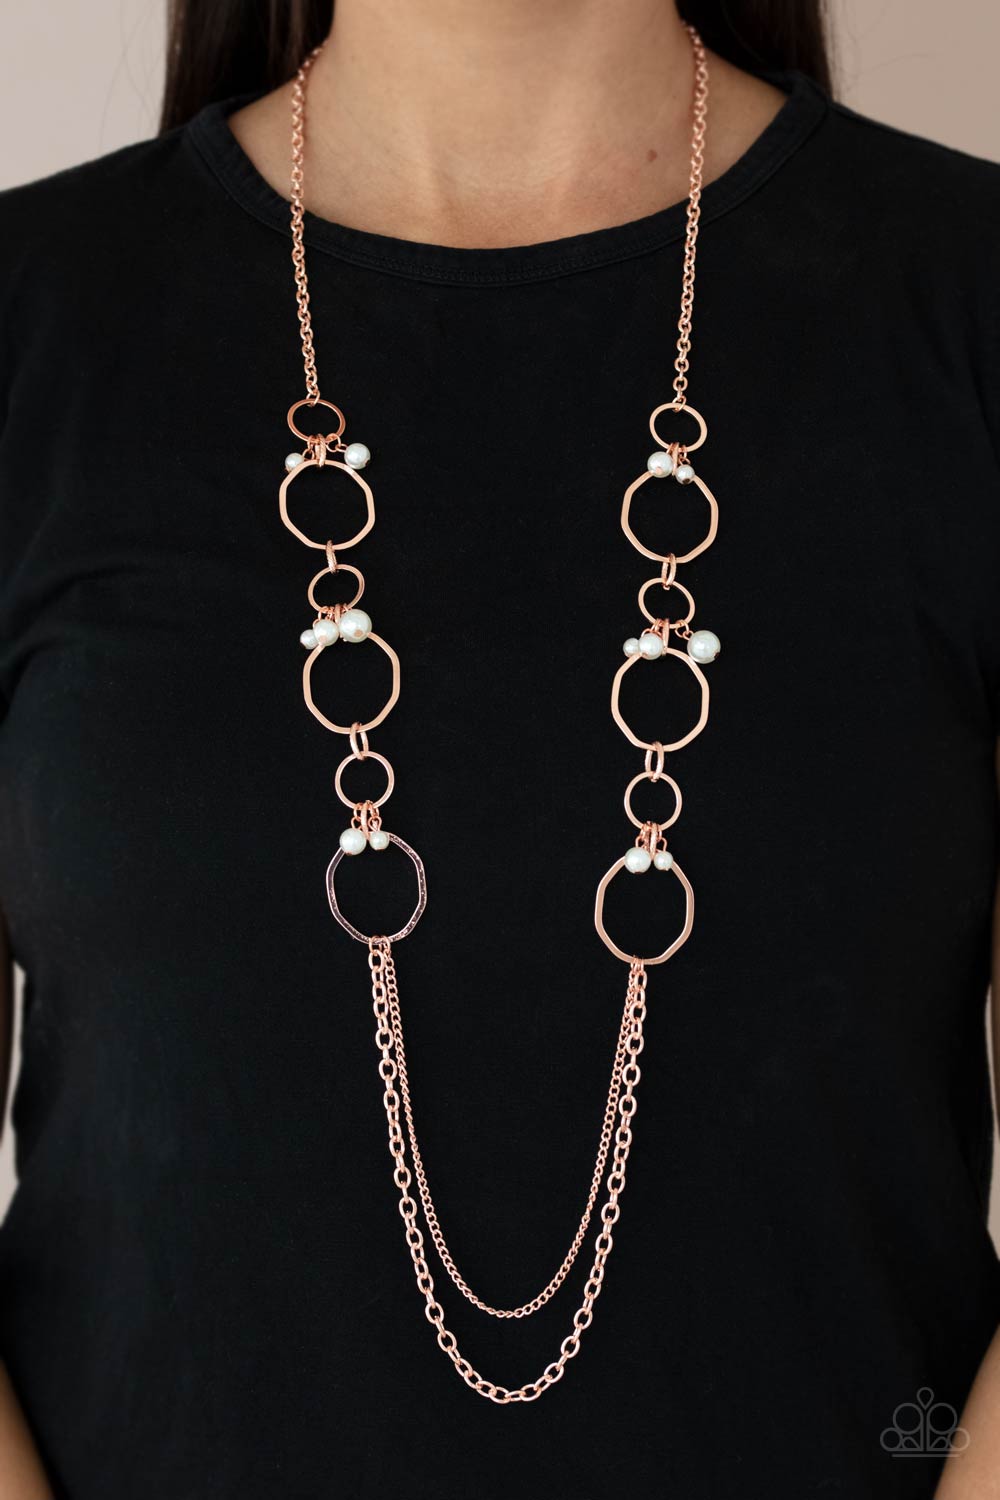 Ante UPSCALE​ - copper - Paparazzi necklace